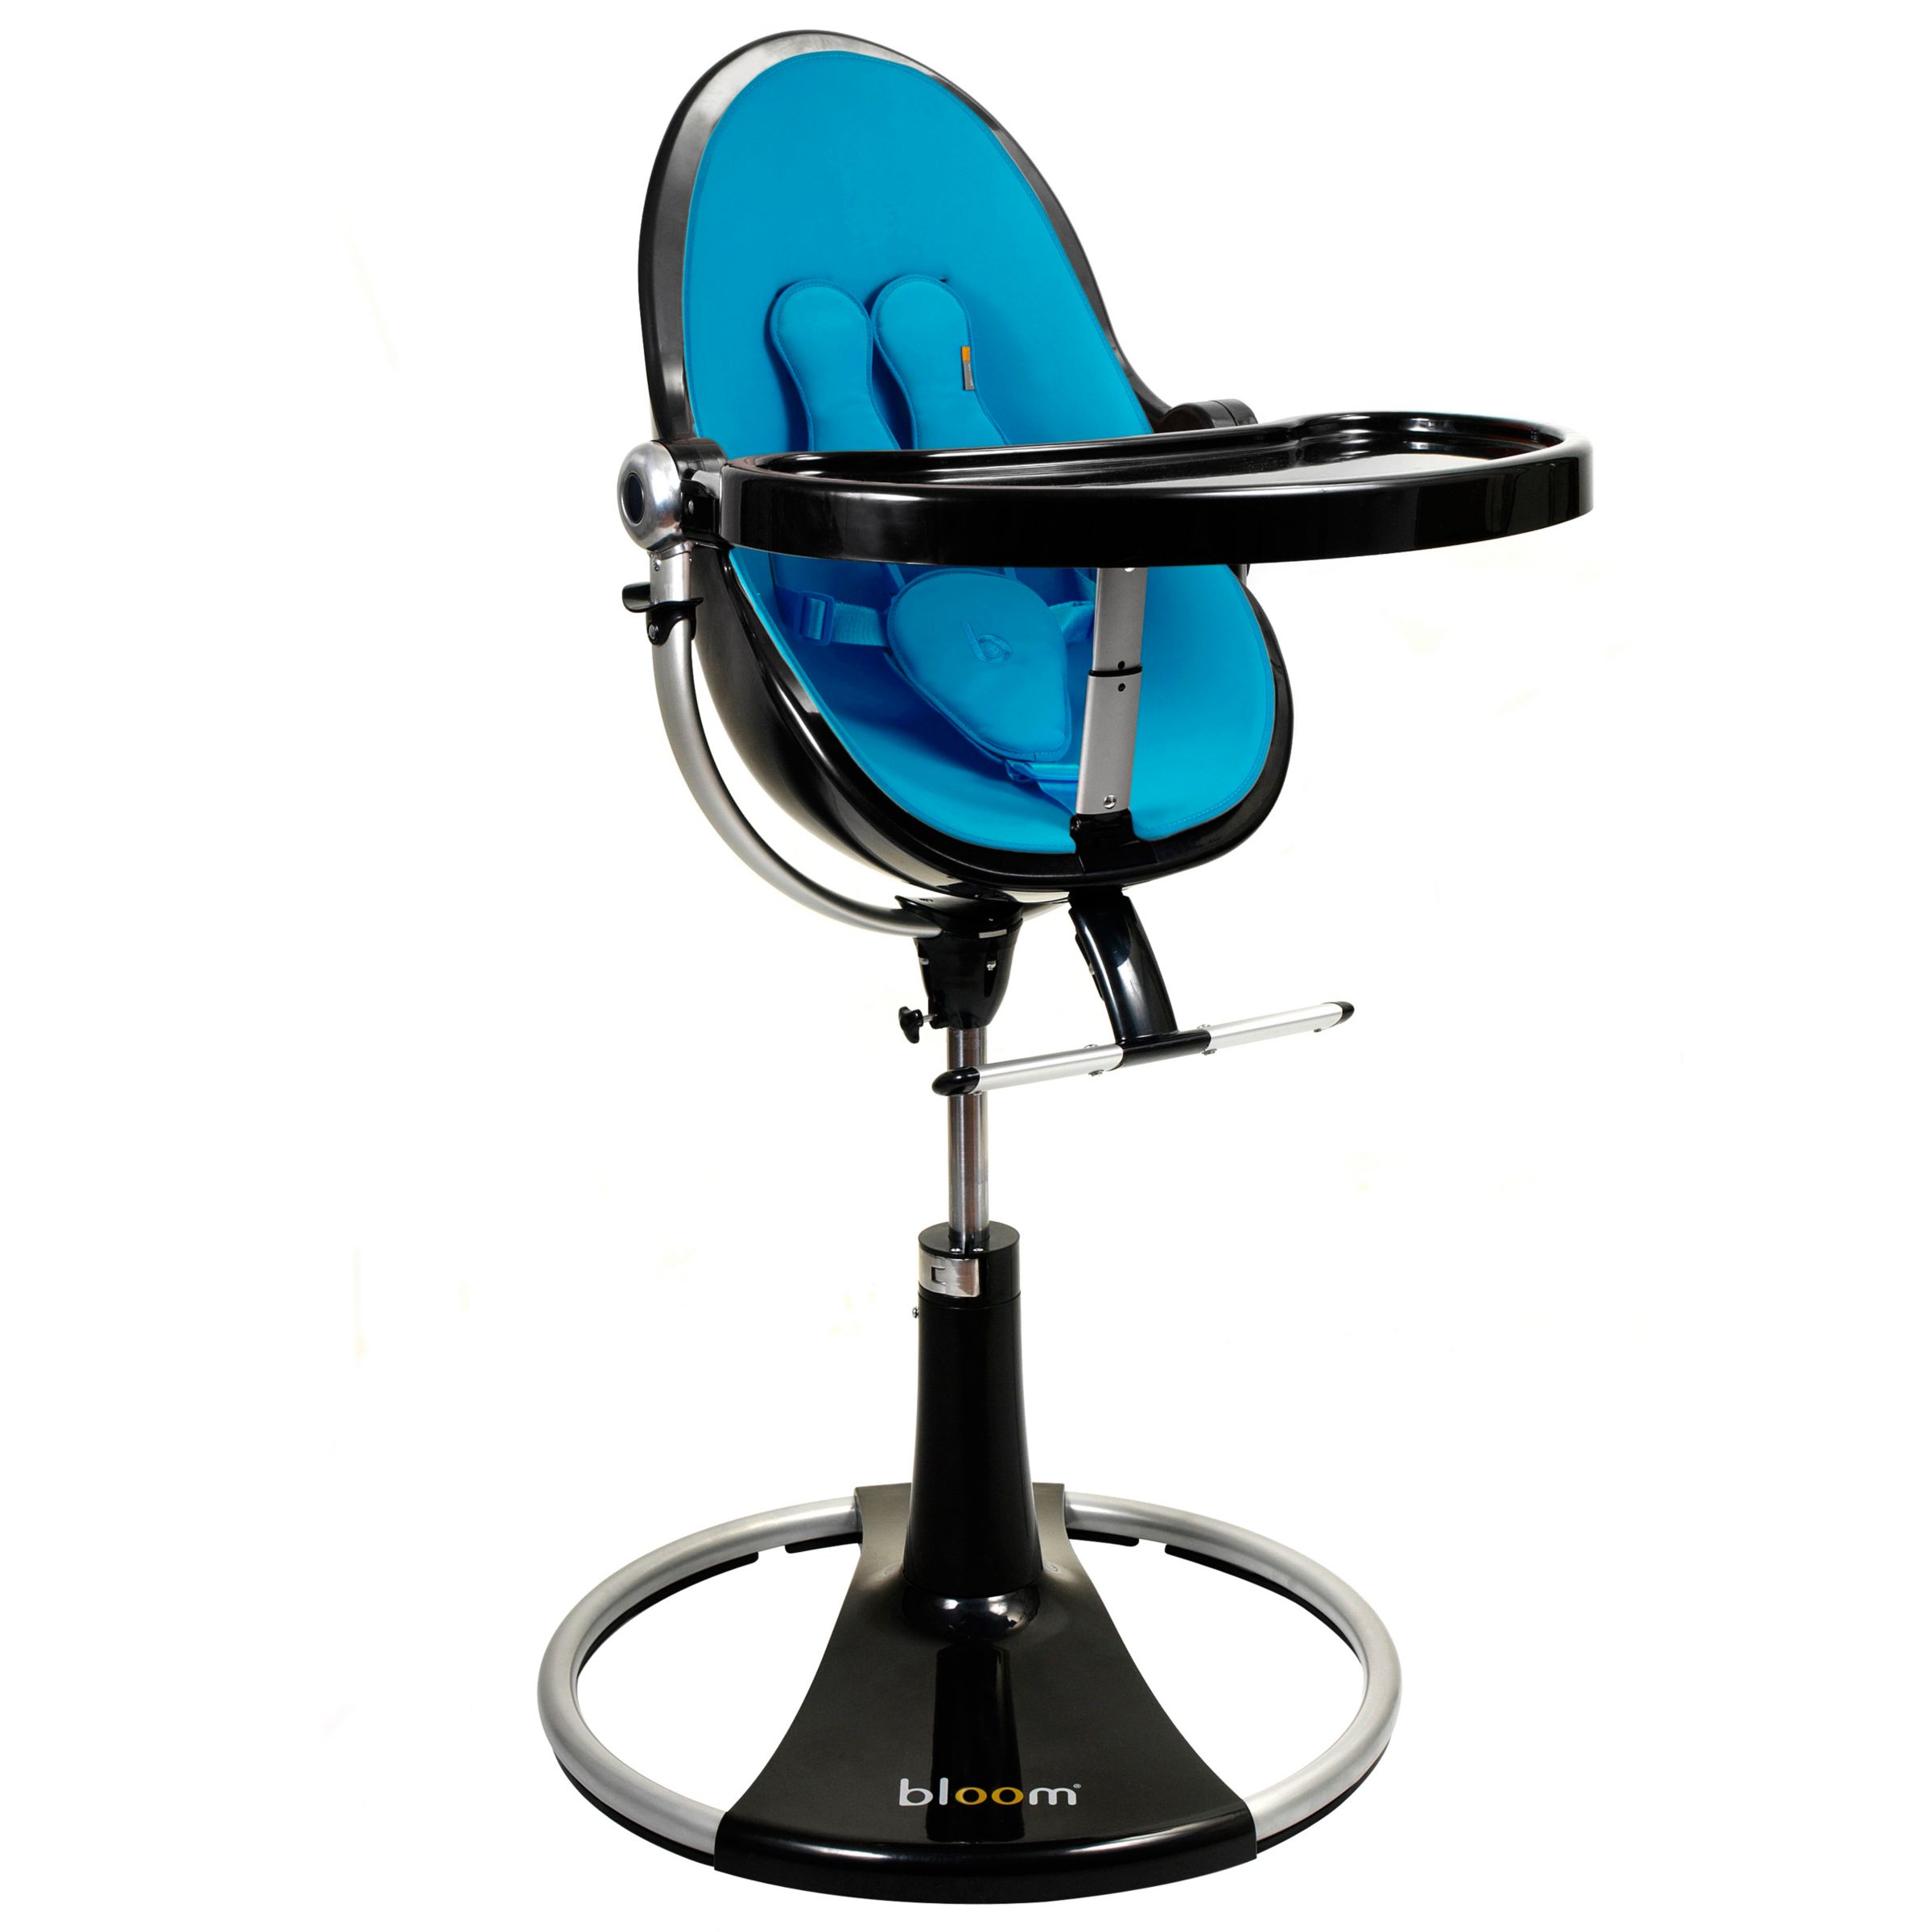 bloom Fresco Loft Contemporary Leatherette Baby Chair, Ebony Black with Bermuda Blue at John Lewis